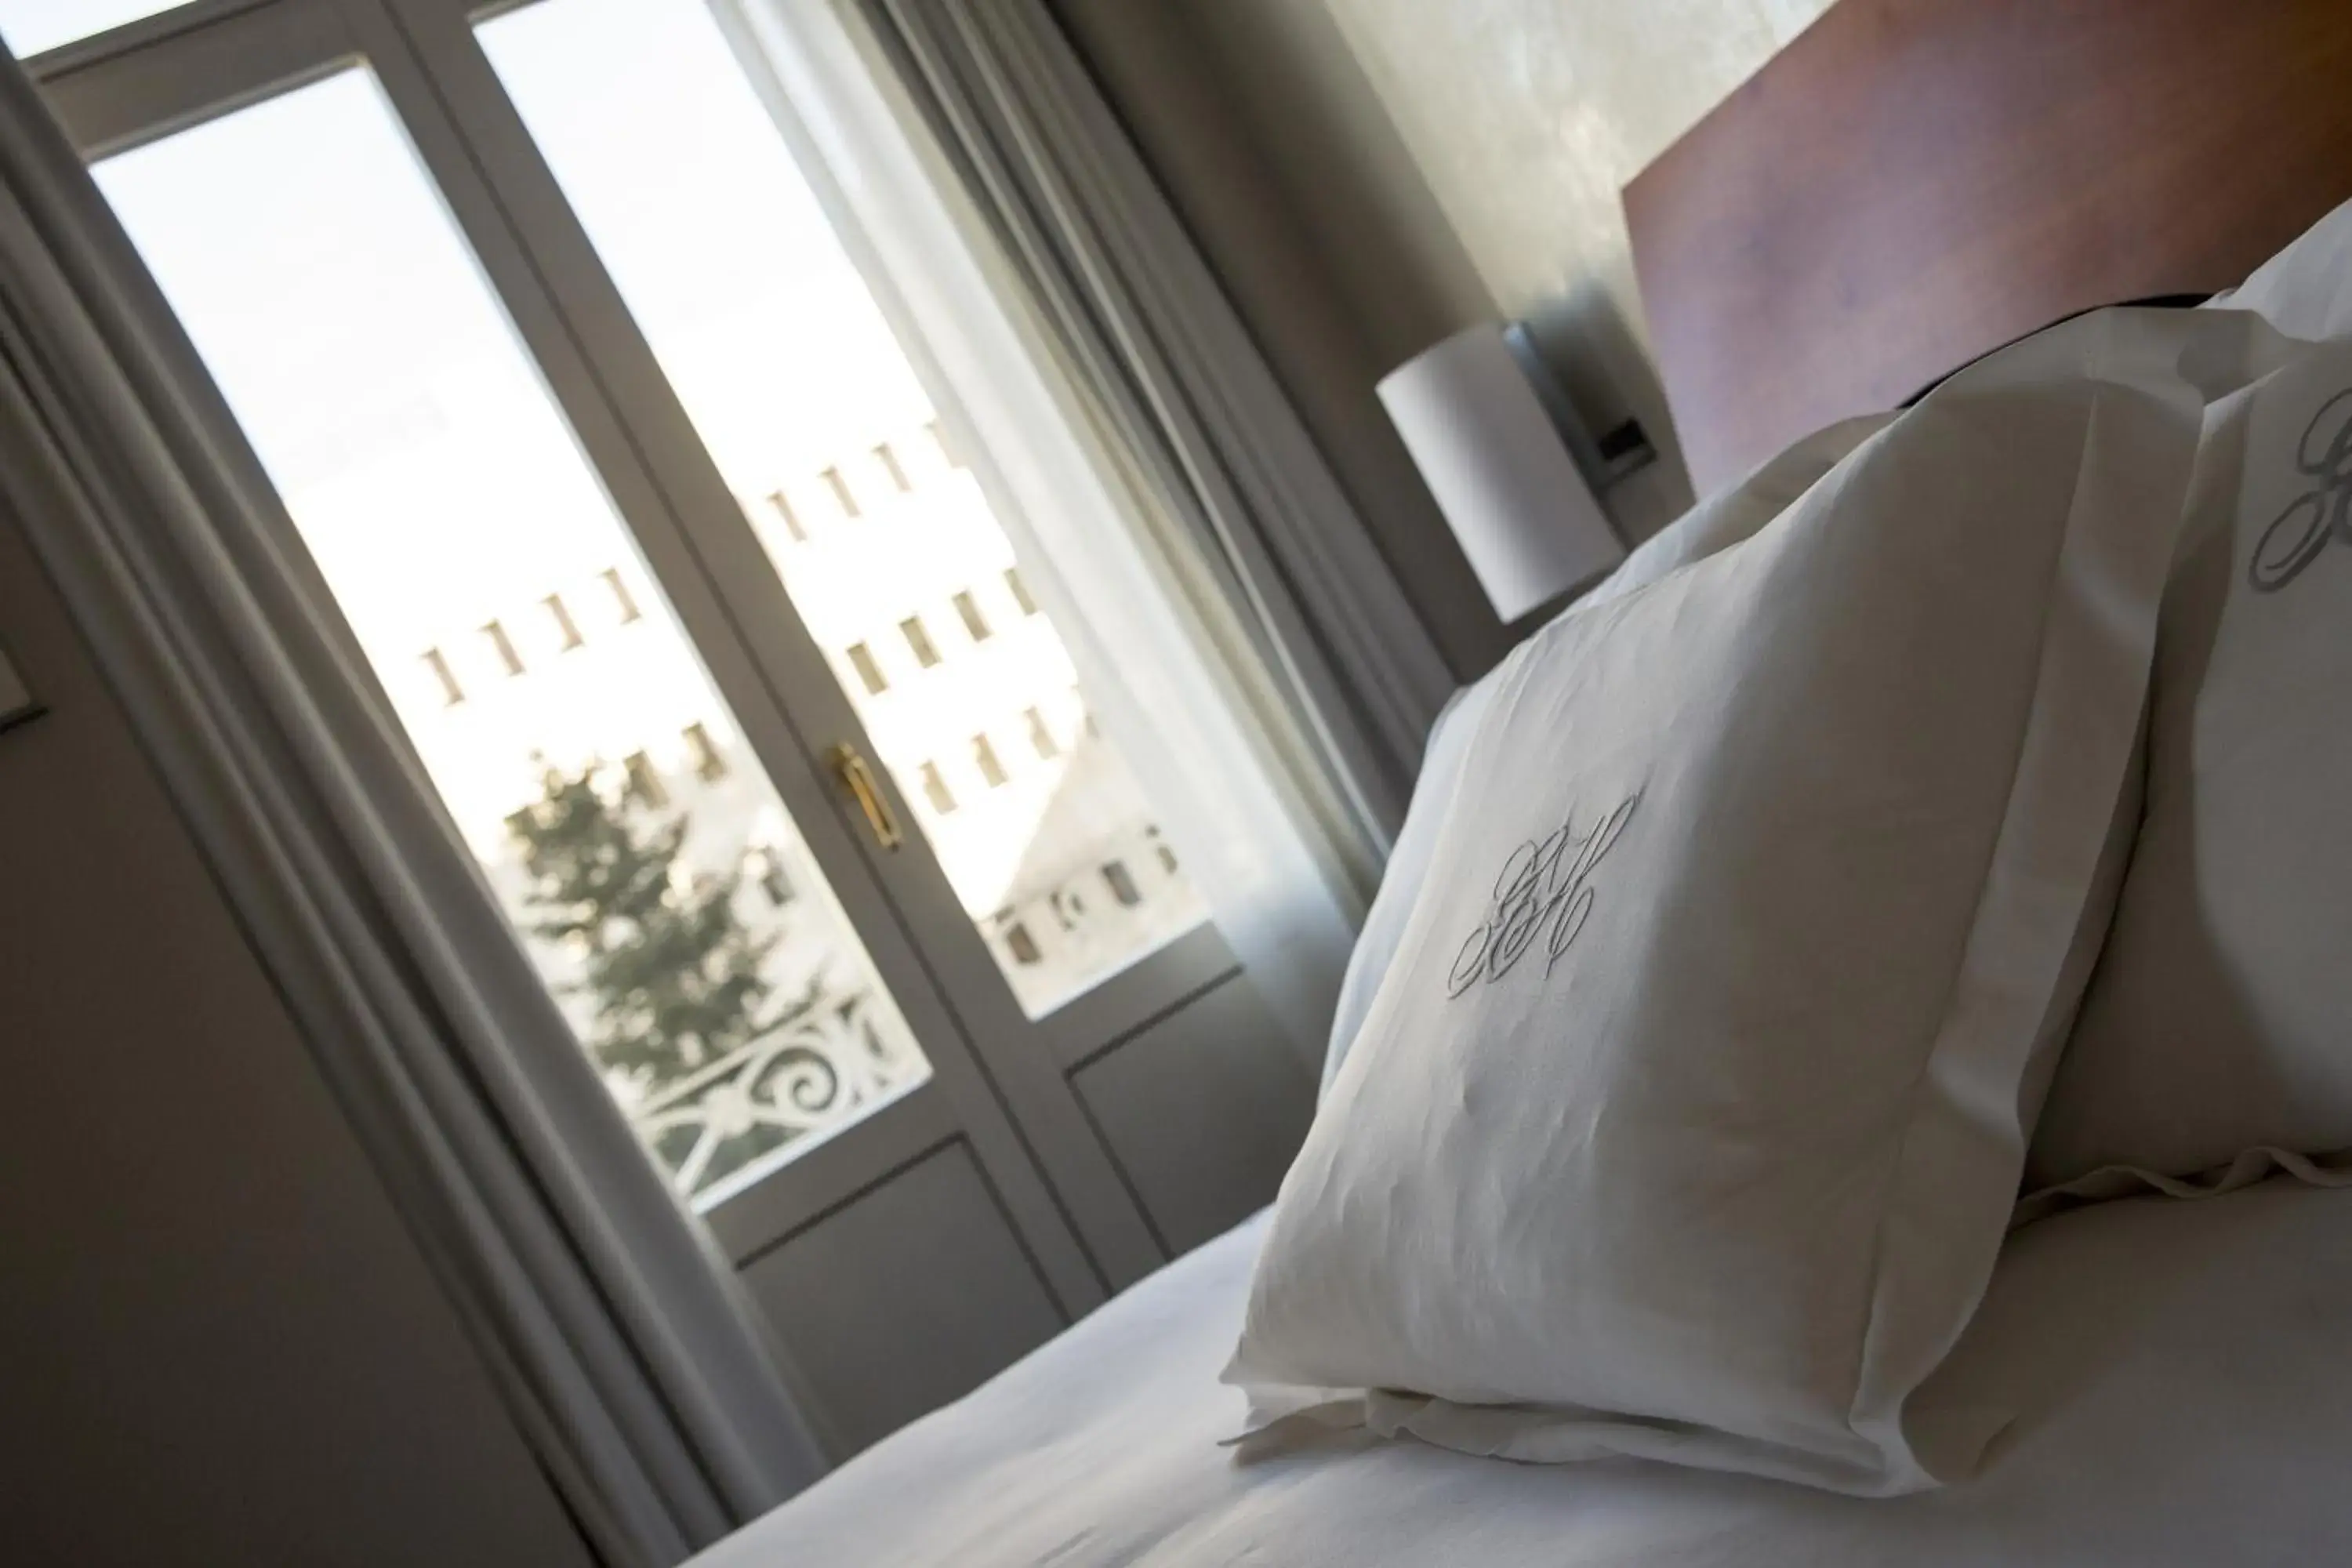 Bed in Gran Hotel Albacete